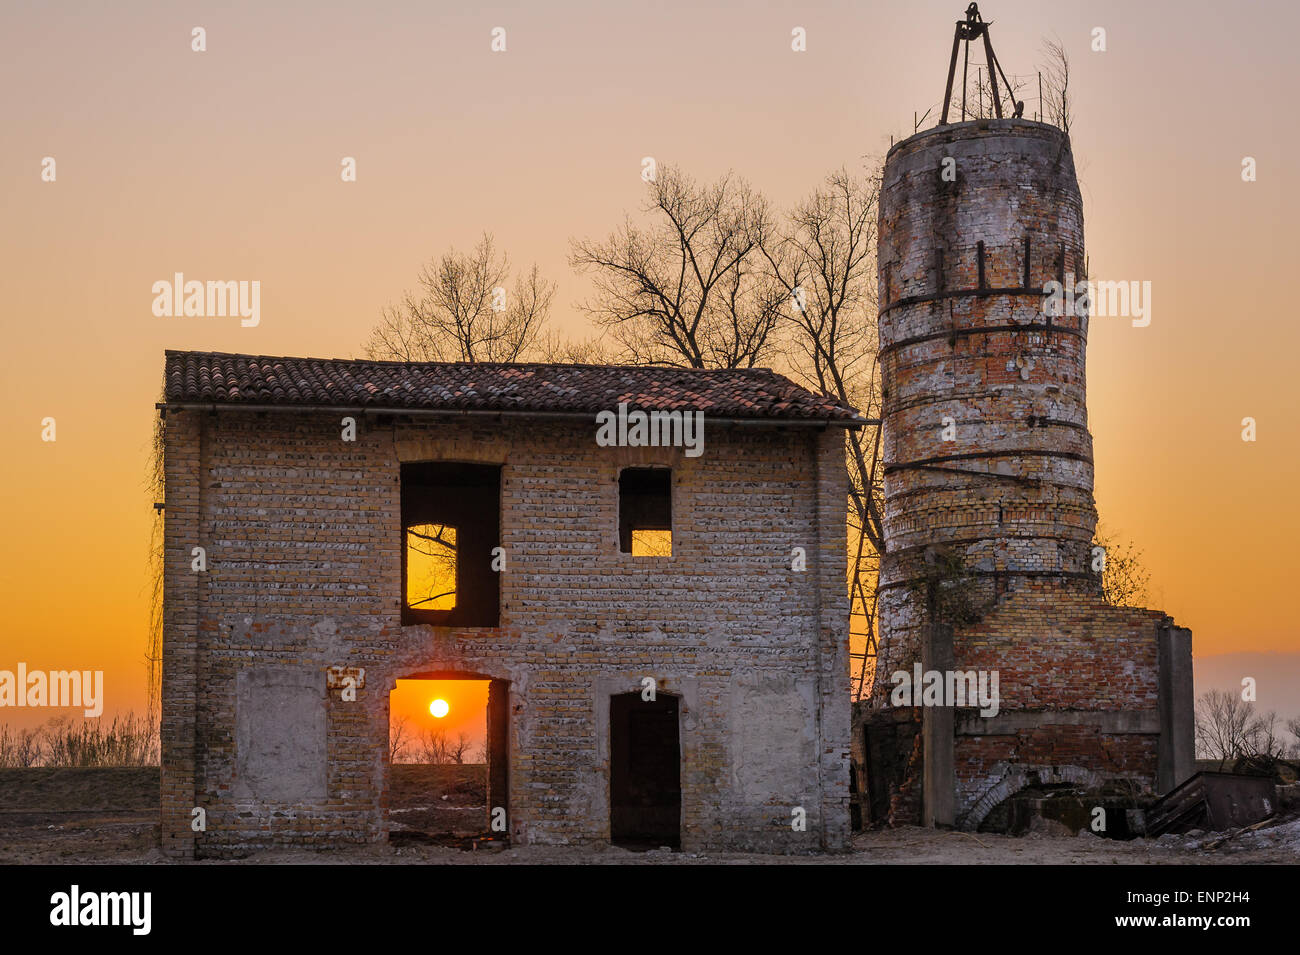 Abandoned brick kiln, at sunset Stock Photo